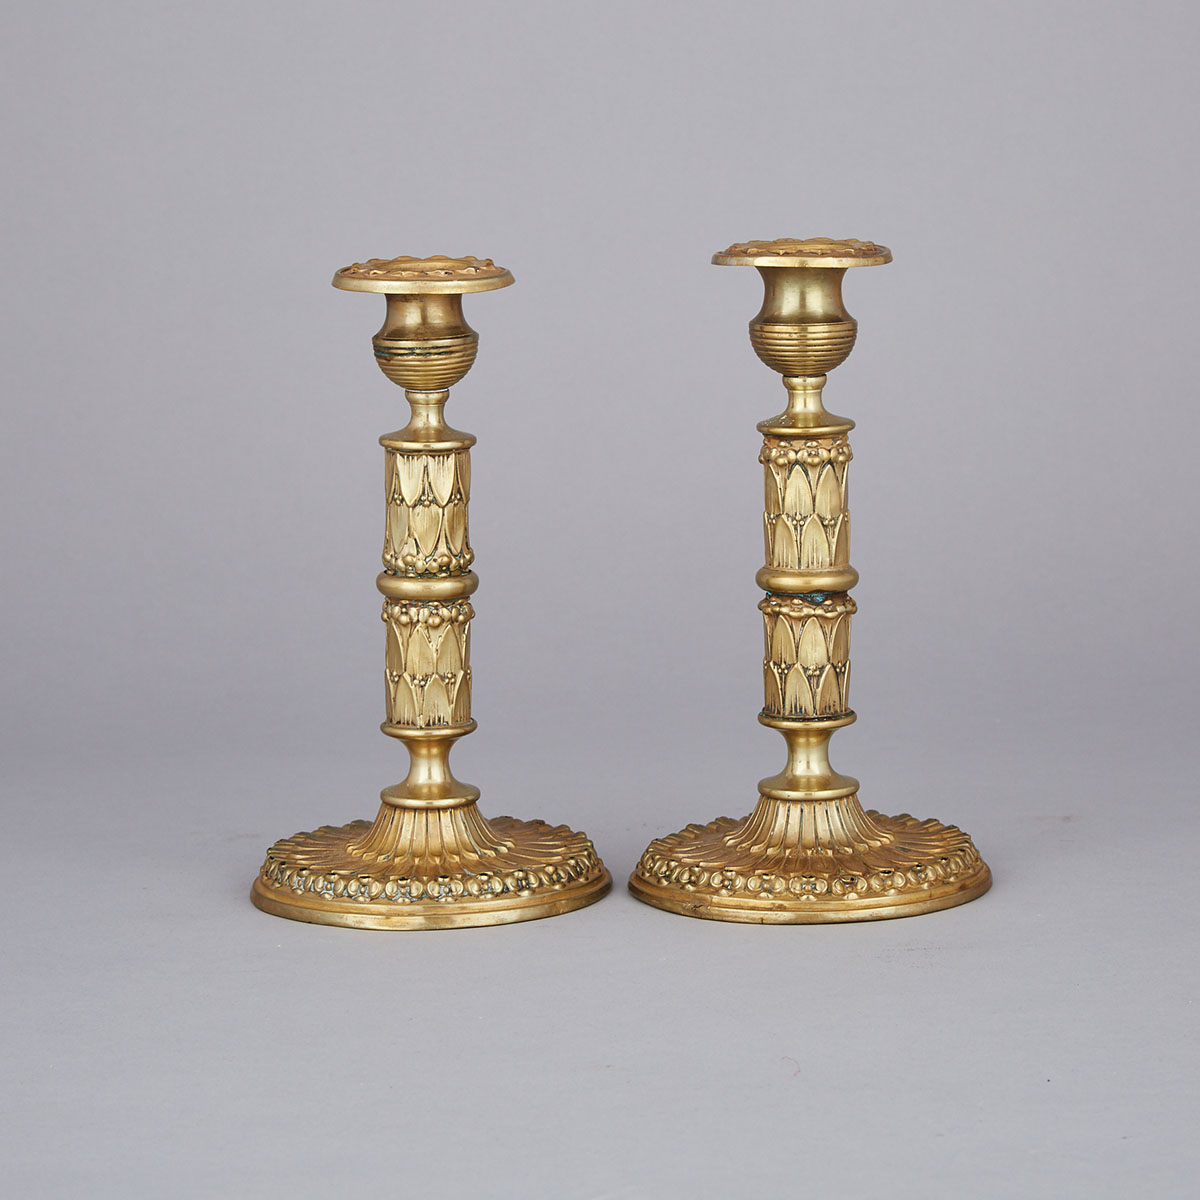 Pair of Gilt Pressed Brass Candlesticks, mid 19th century